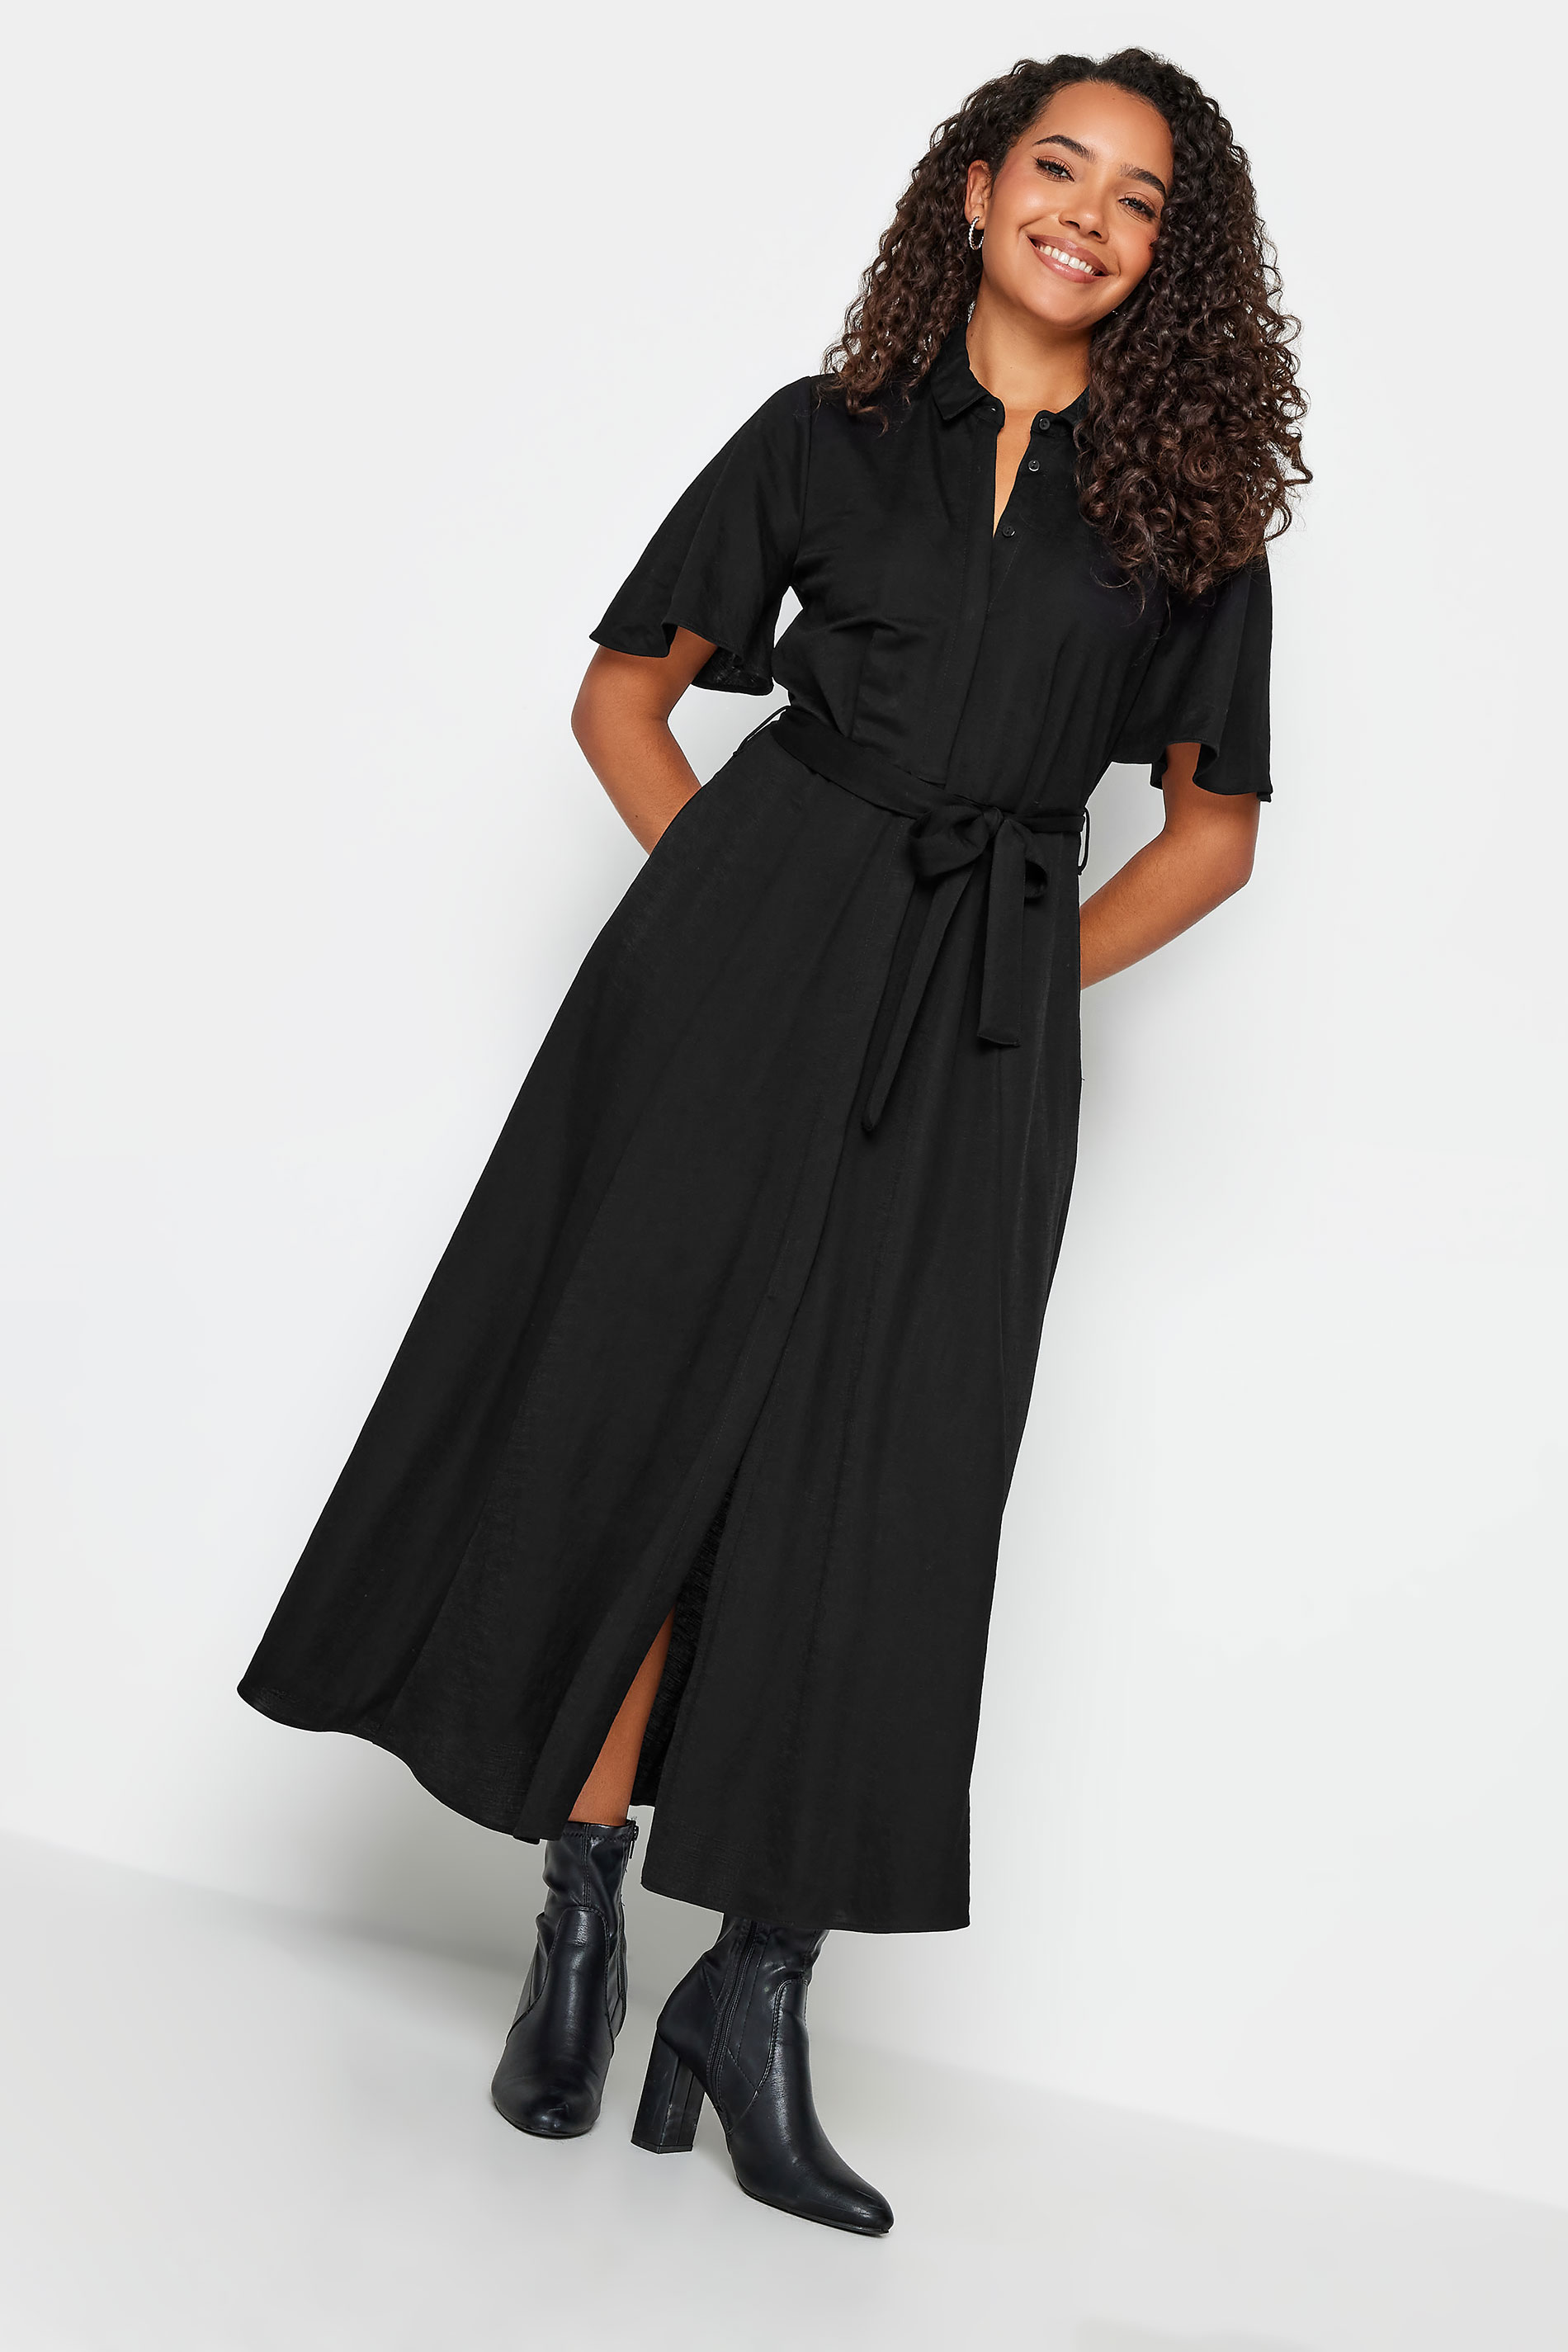 M&Co Black Button Through Collared Midaxi Dress | M&Co 1